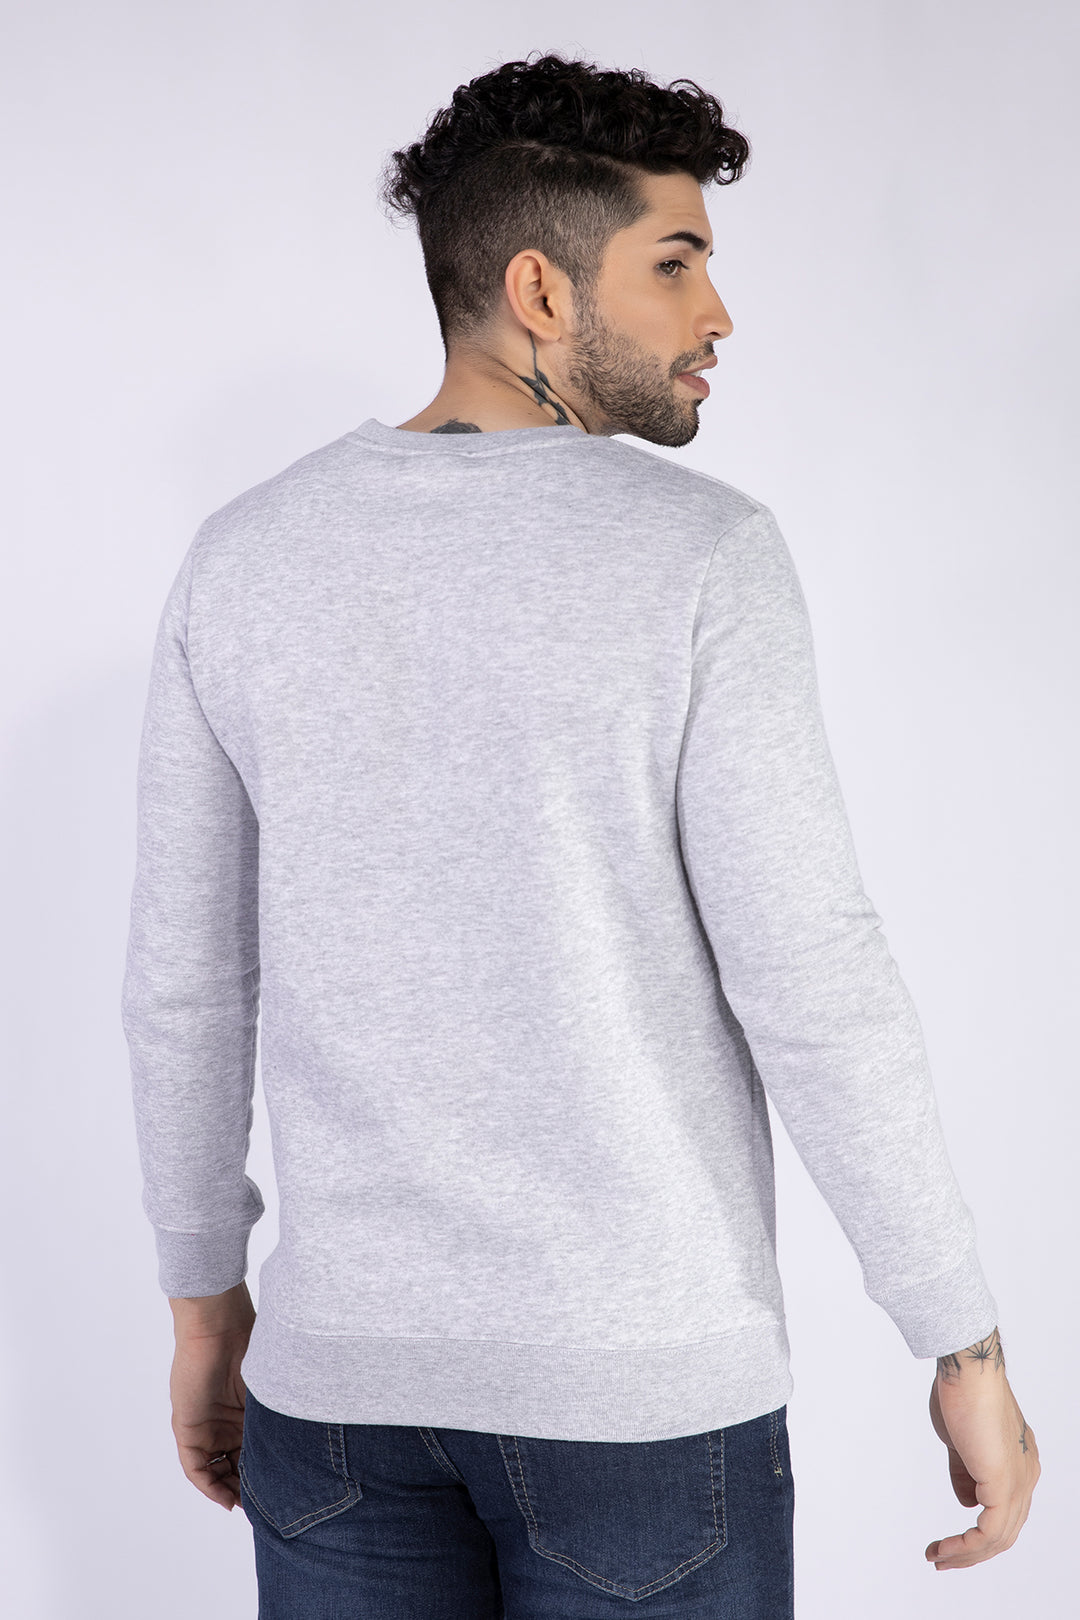 Rare Embroidered Grey Sweatshirt - W21 - MSW031R